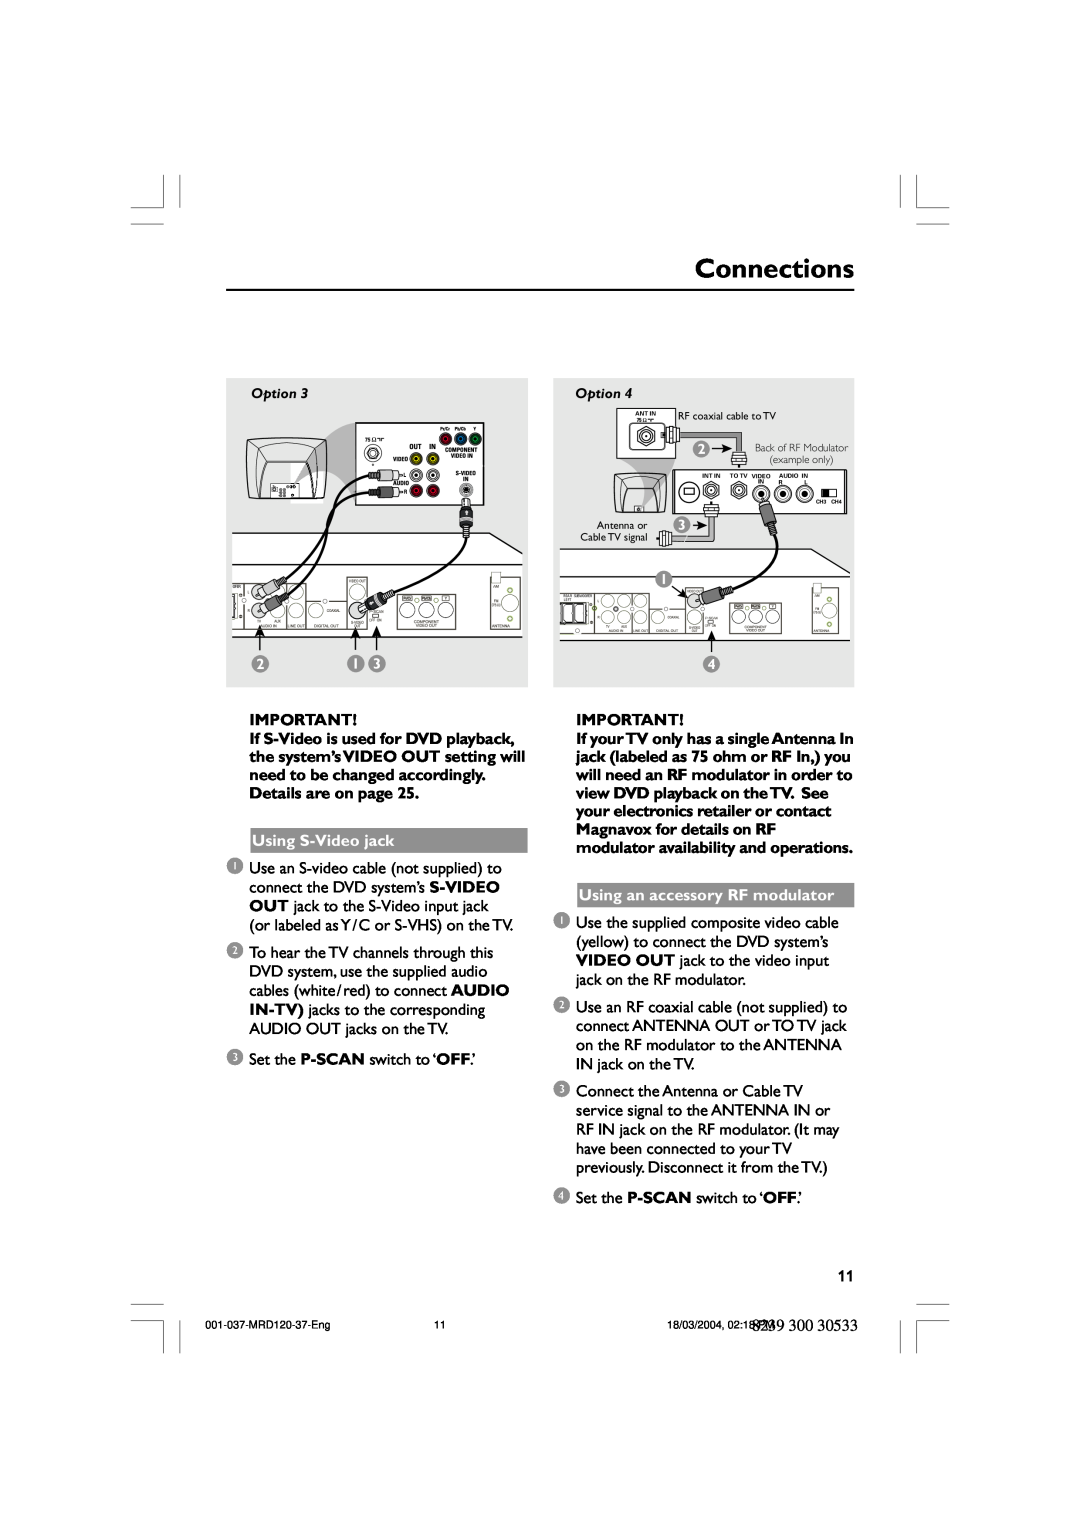 Magnavox MRD120 warranty Connections, Using S-Videojack, Using an accessory RF modulator, 8239, Option 